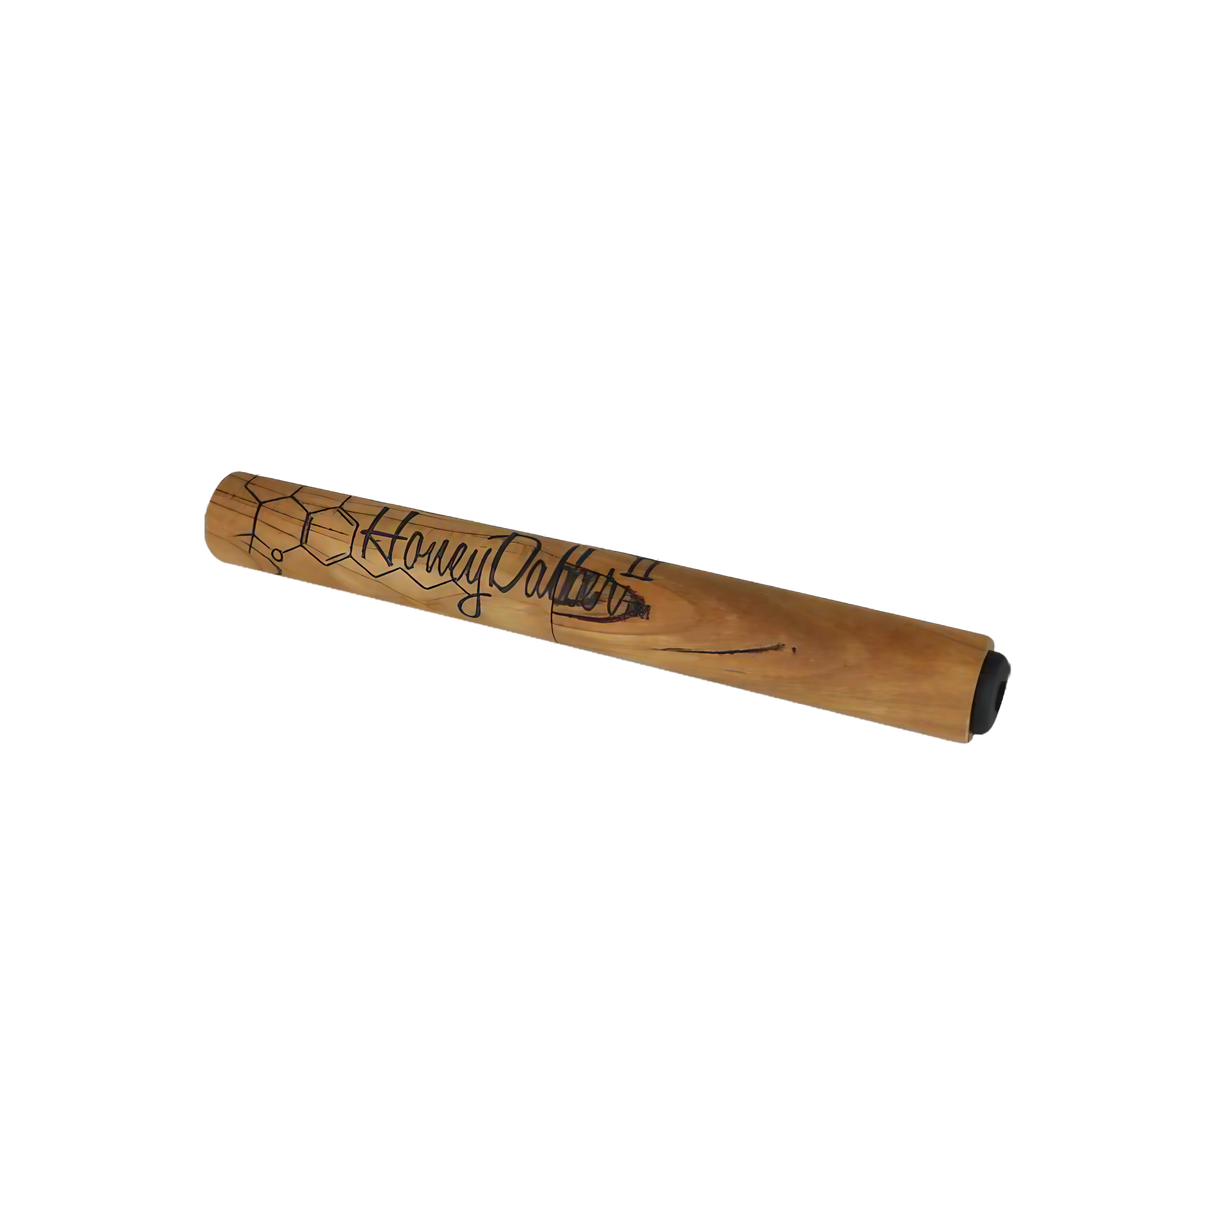 Honey Dabber II Vapor Straw Collector, Titanium & Wood, 5" Size, USA Made, Side View